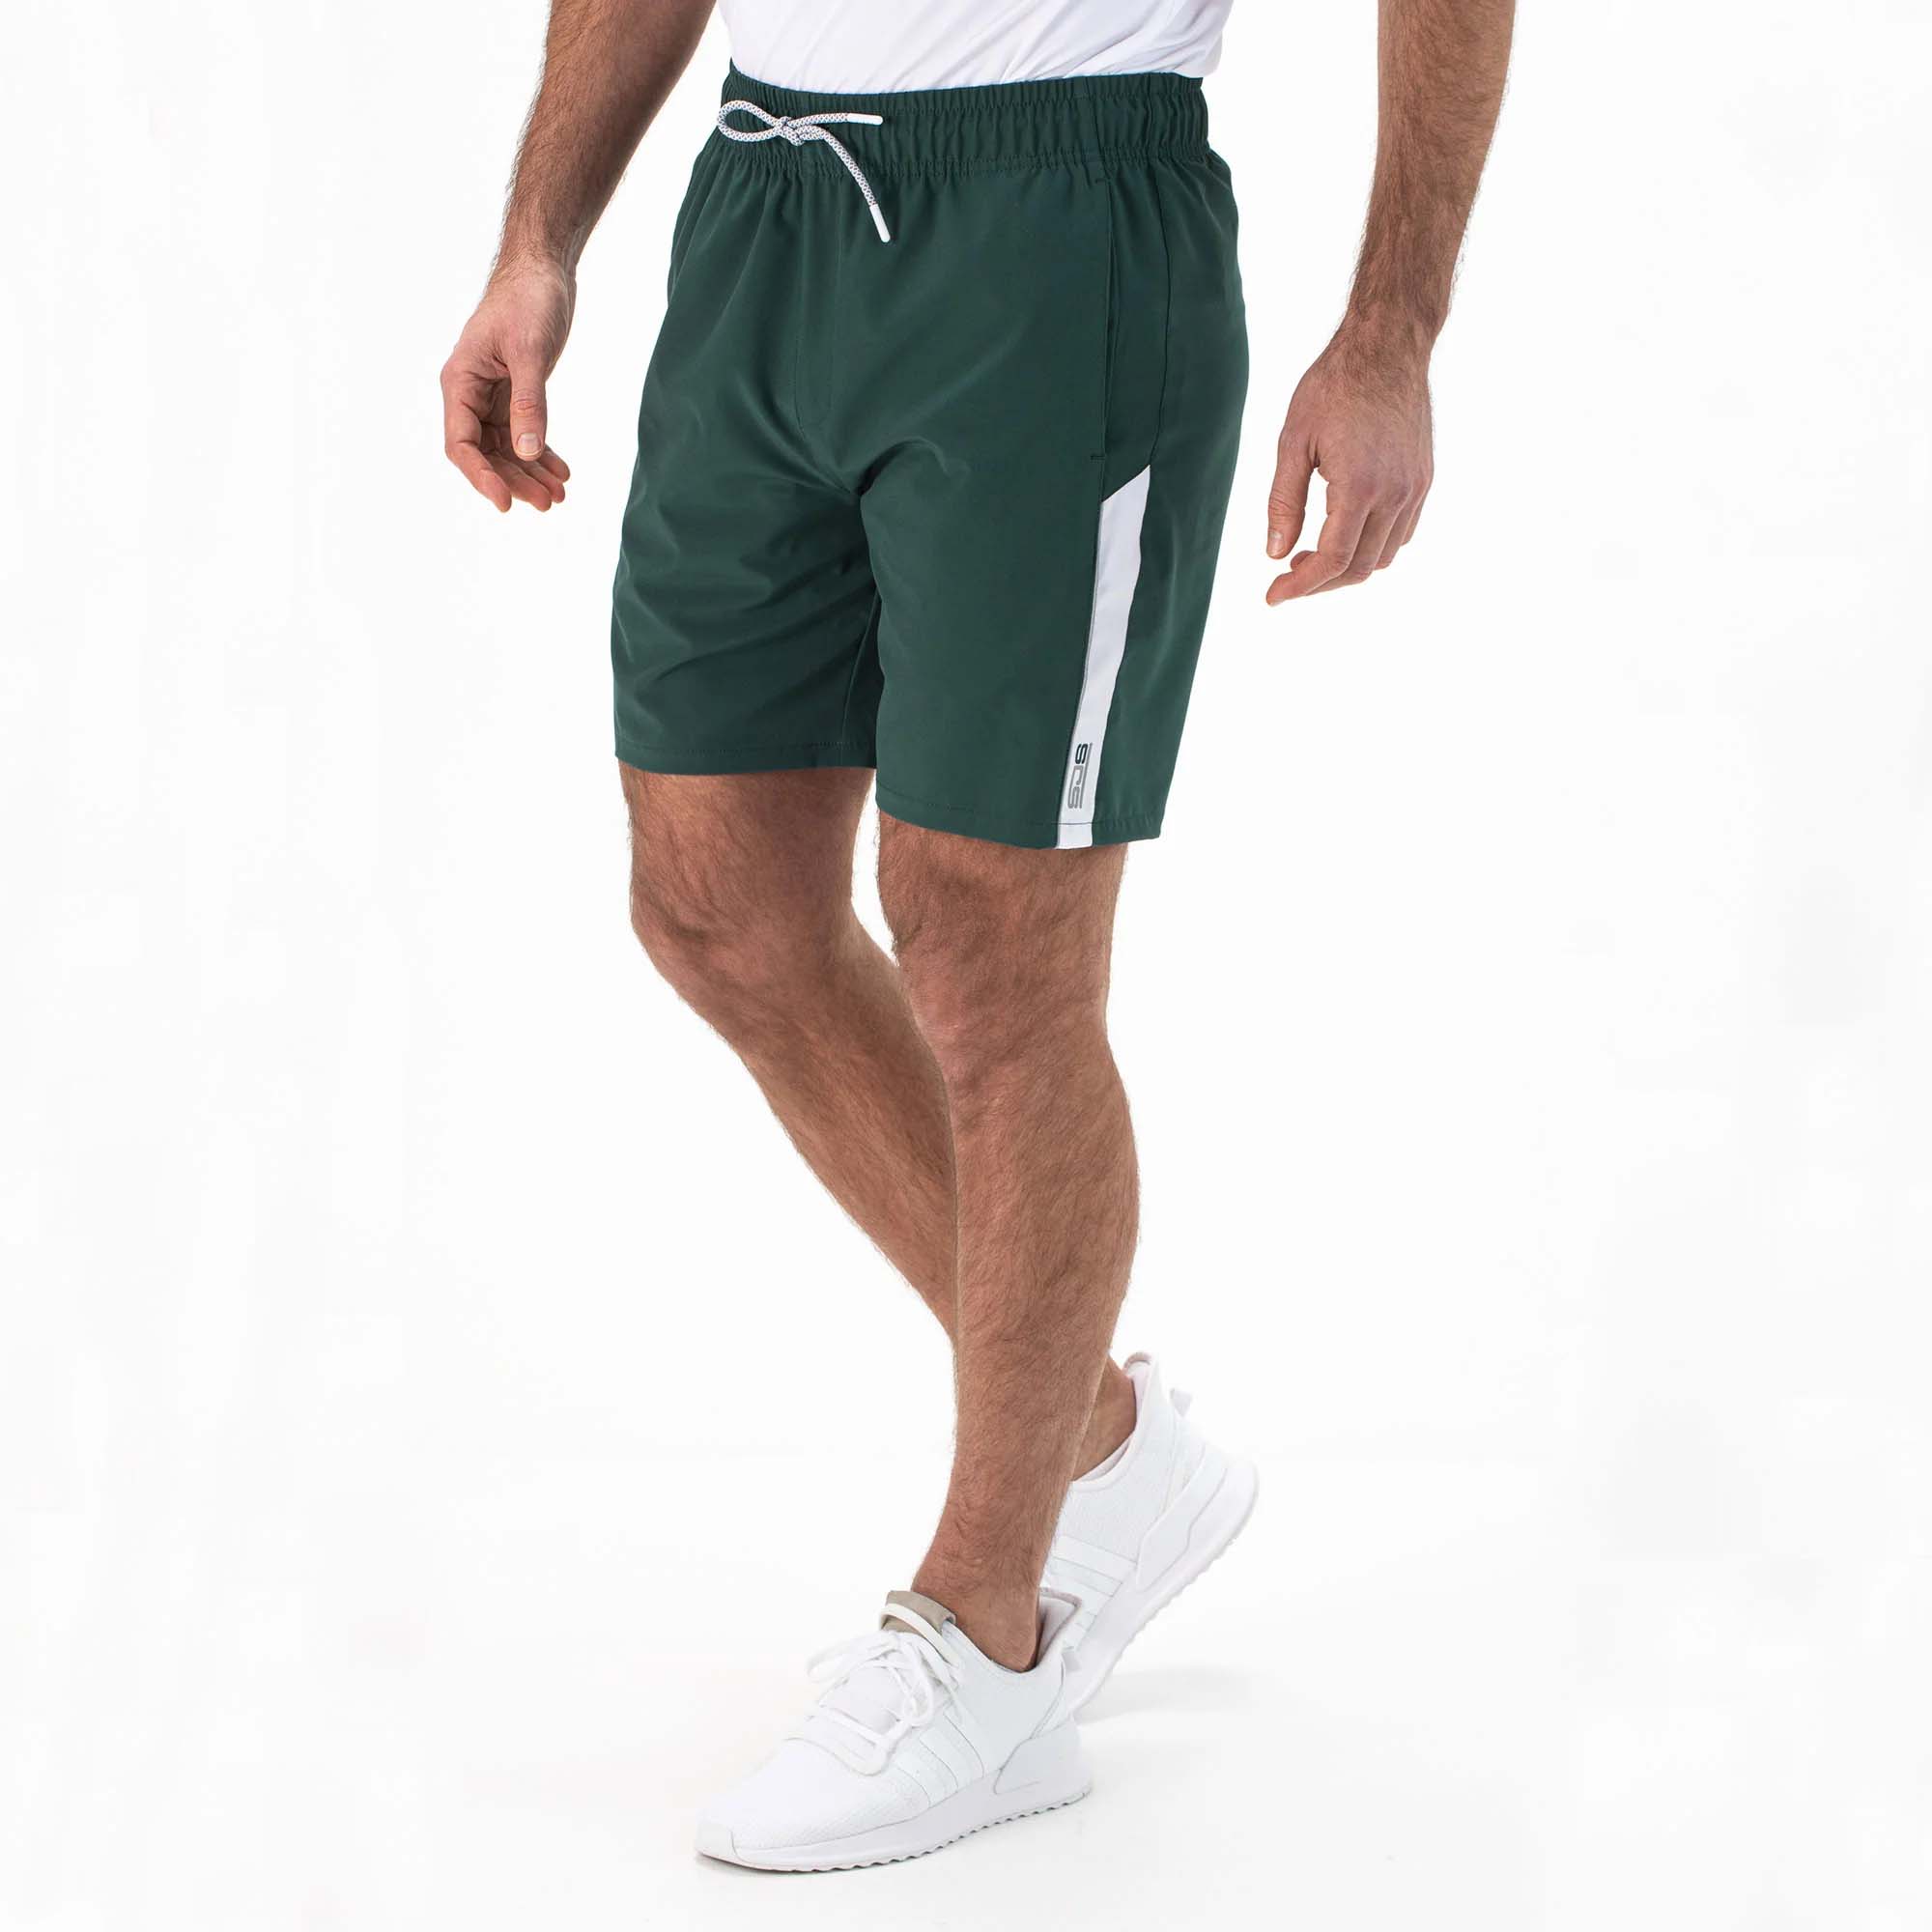 SJENG SPORTS Men shorts